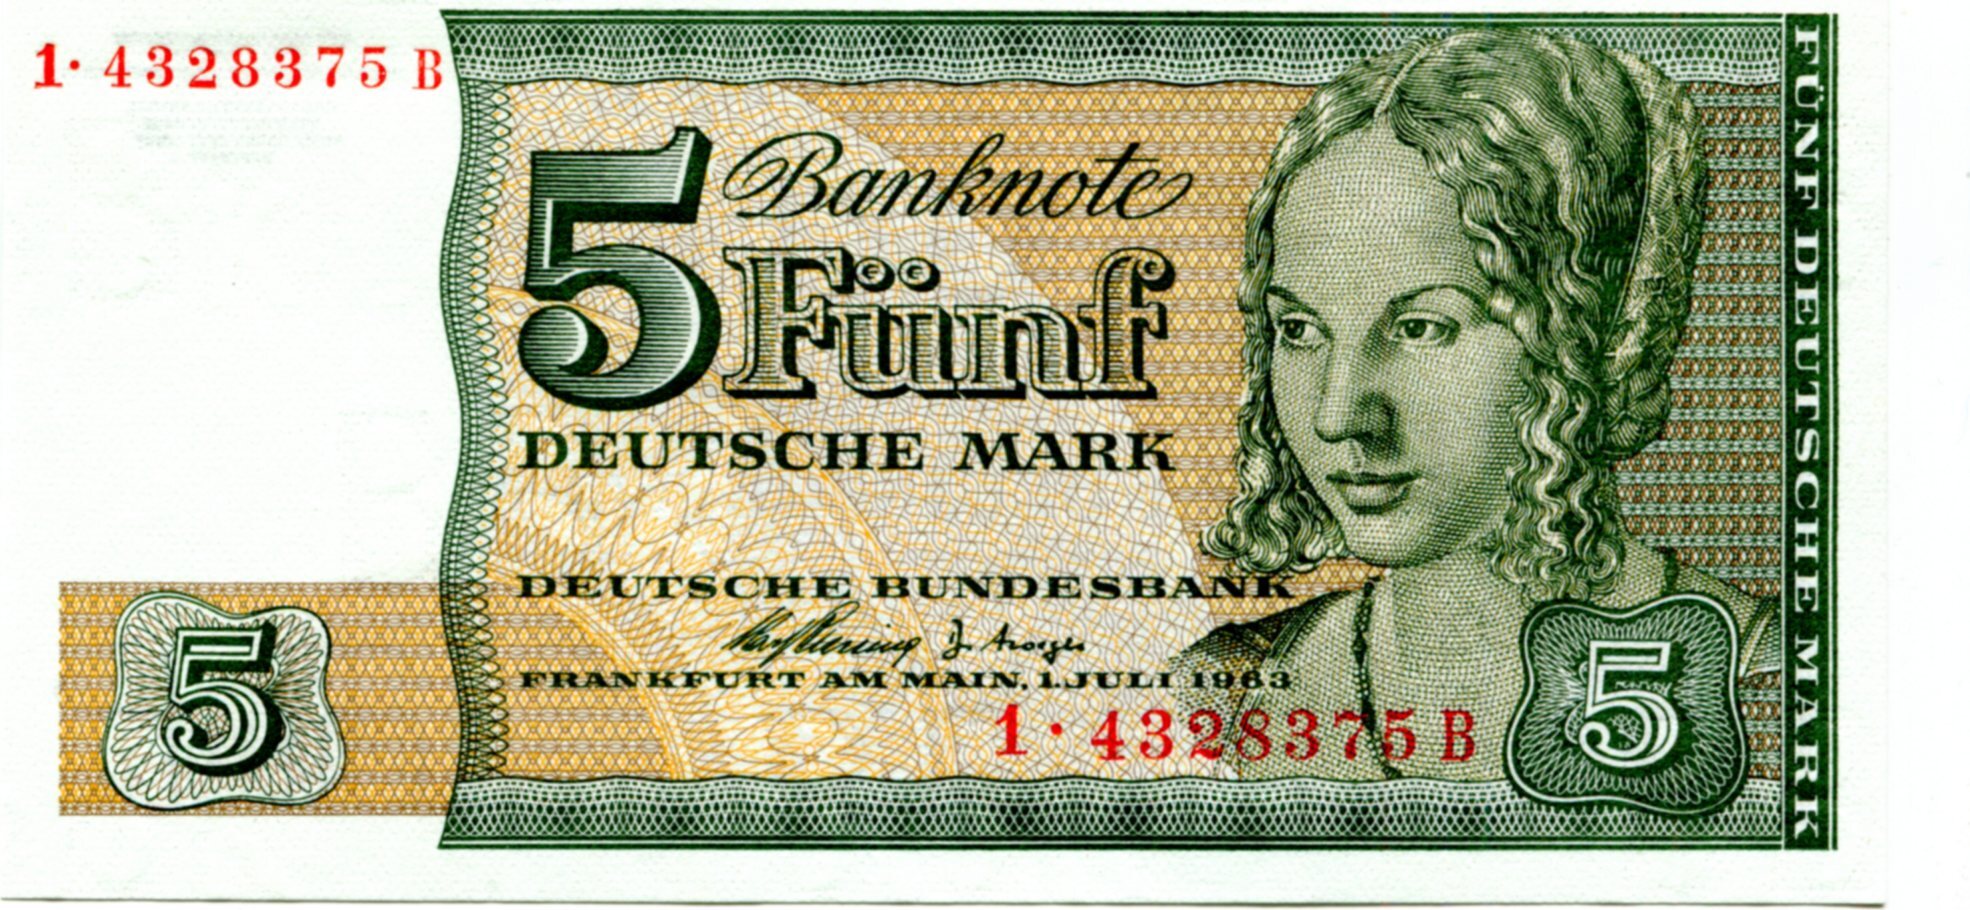 Deutsche mark. 5 Марок ФРГ банкнота. Дойч марки ФРГ. Немецкие марки деньги. Немецкие марки валюта.